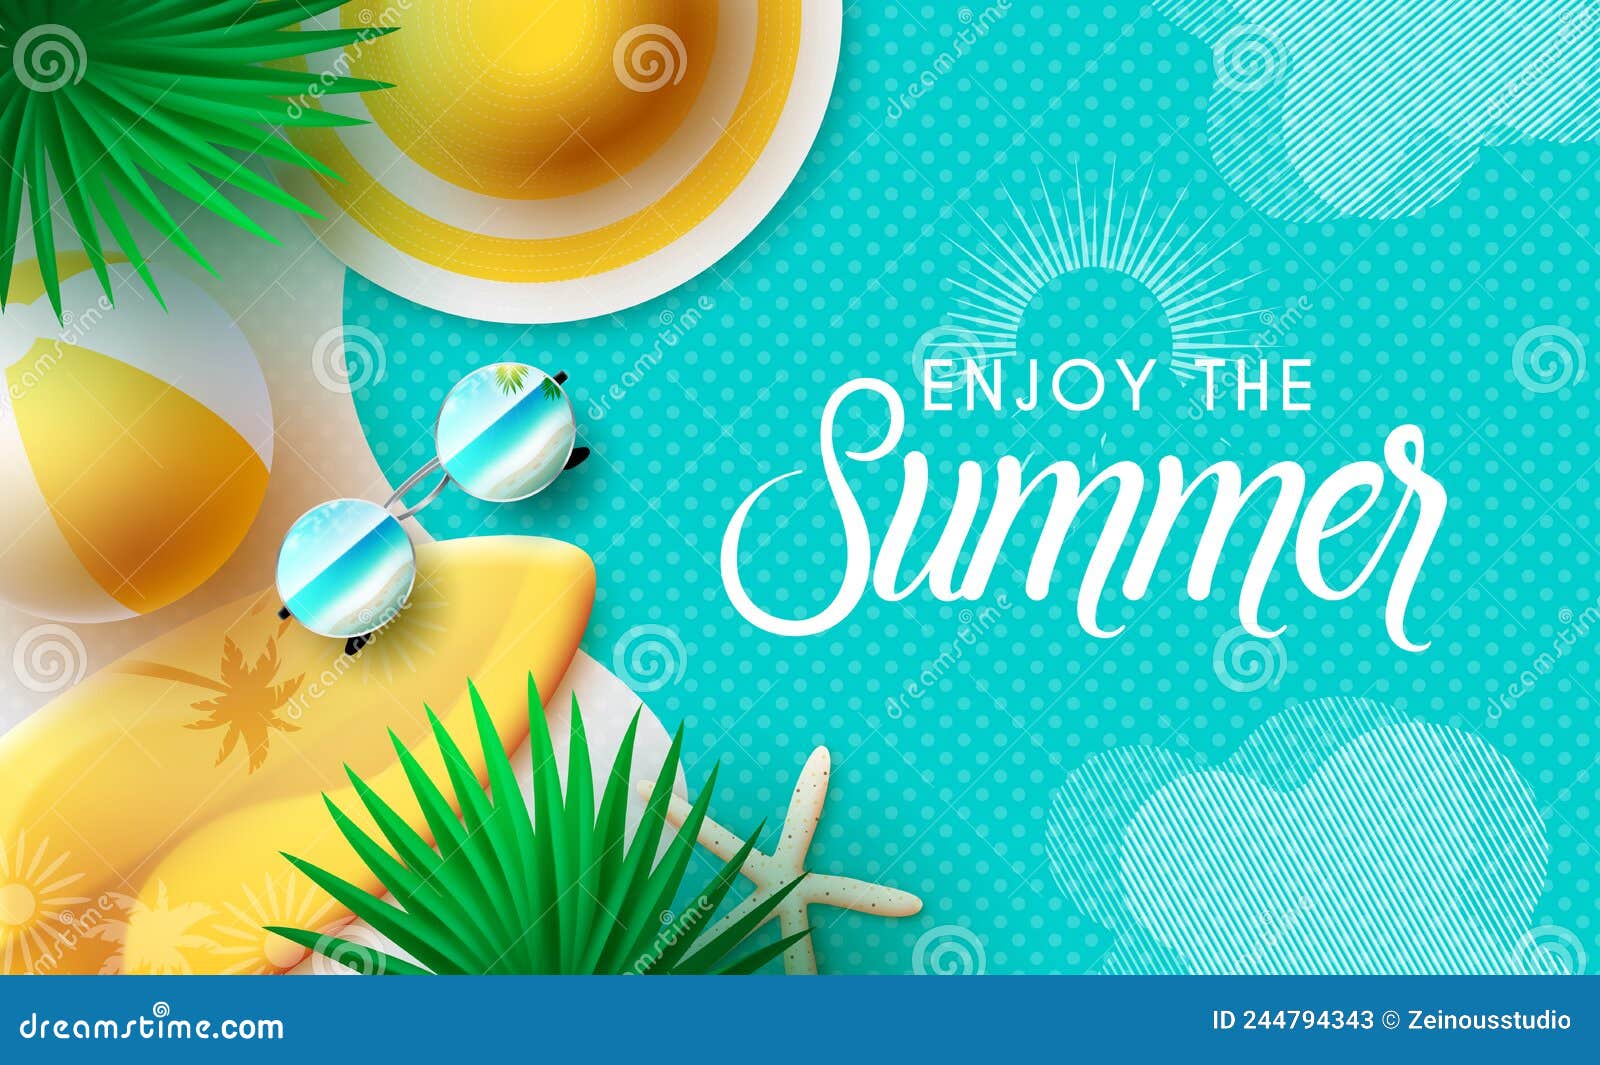 Summer Vector Background Design. Enjoy the Summer Text in Blue Pattern ...